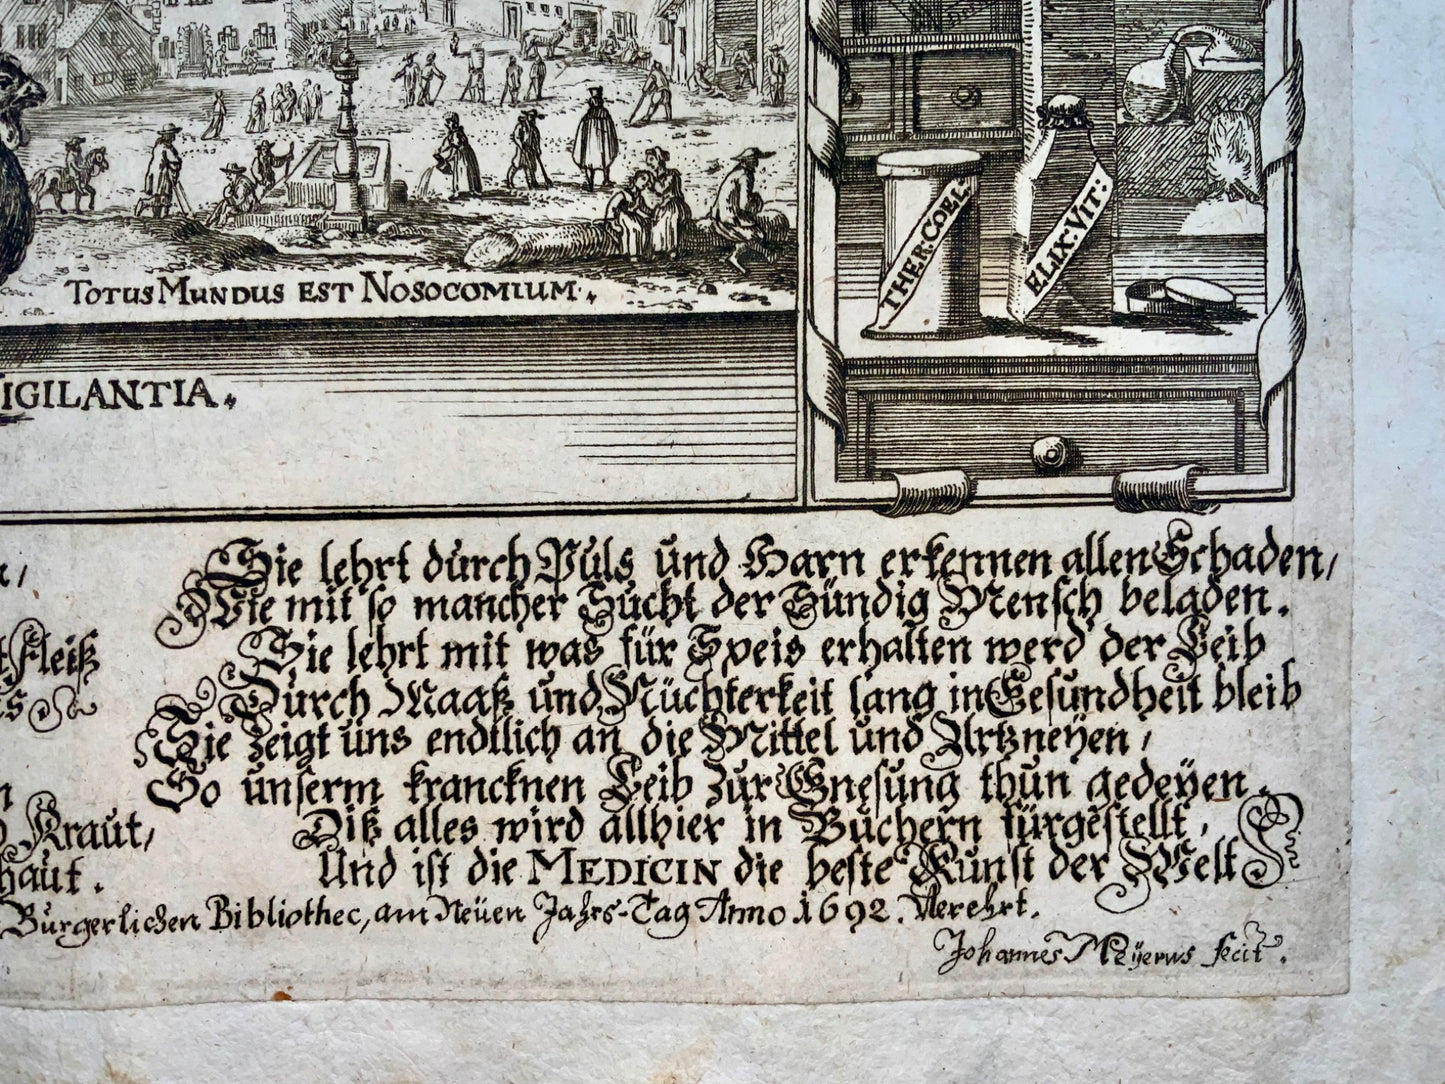 1710 Joh. Meyer, Broadside dedicated to Medicine, ‘Die Heil Kunst’